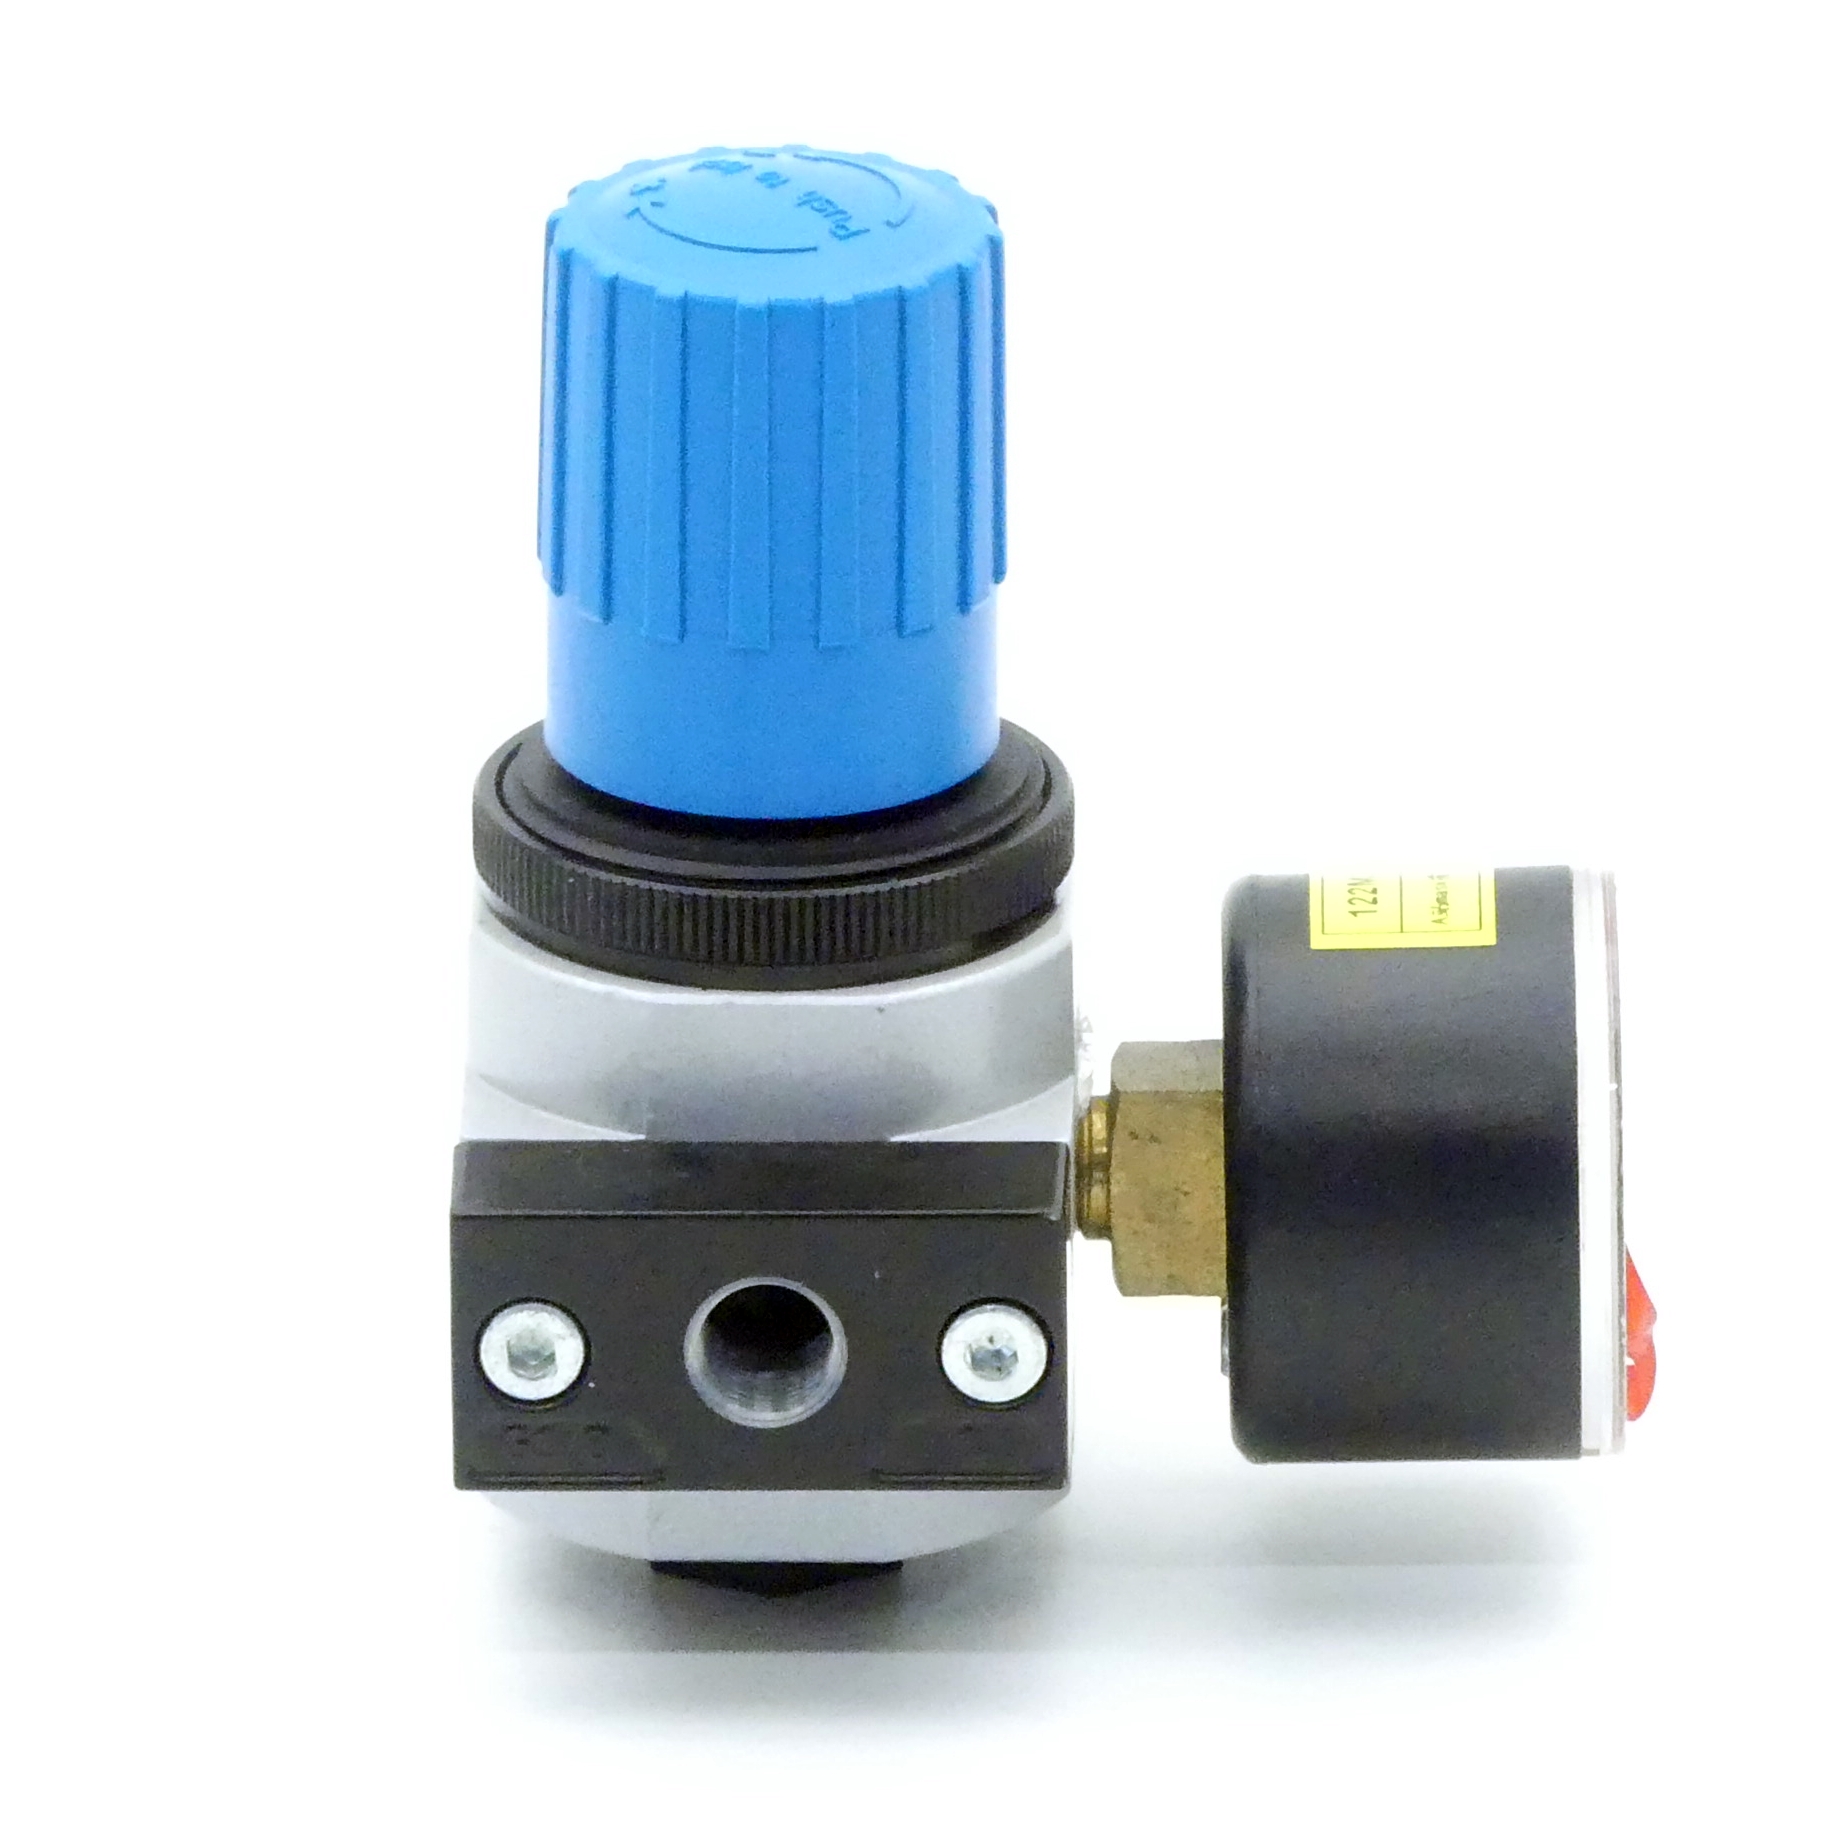 Pressure control valve LR-D-7-I-MINI 